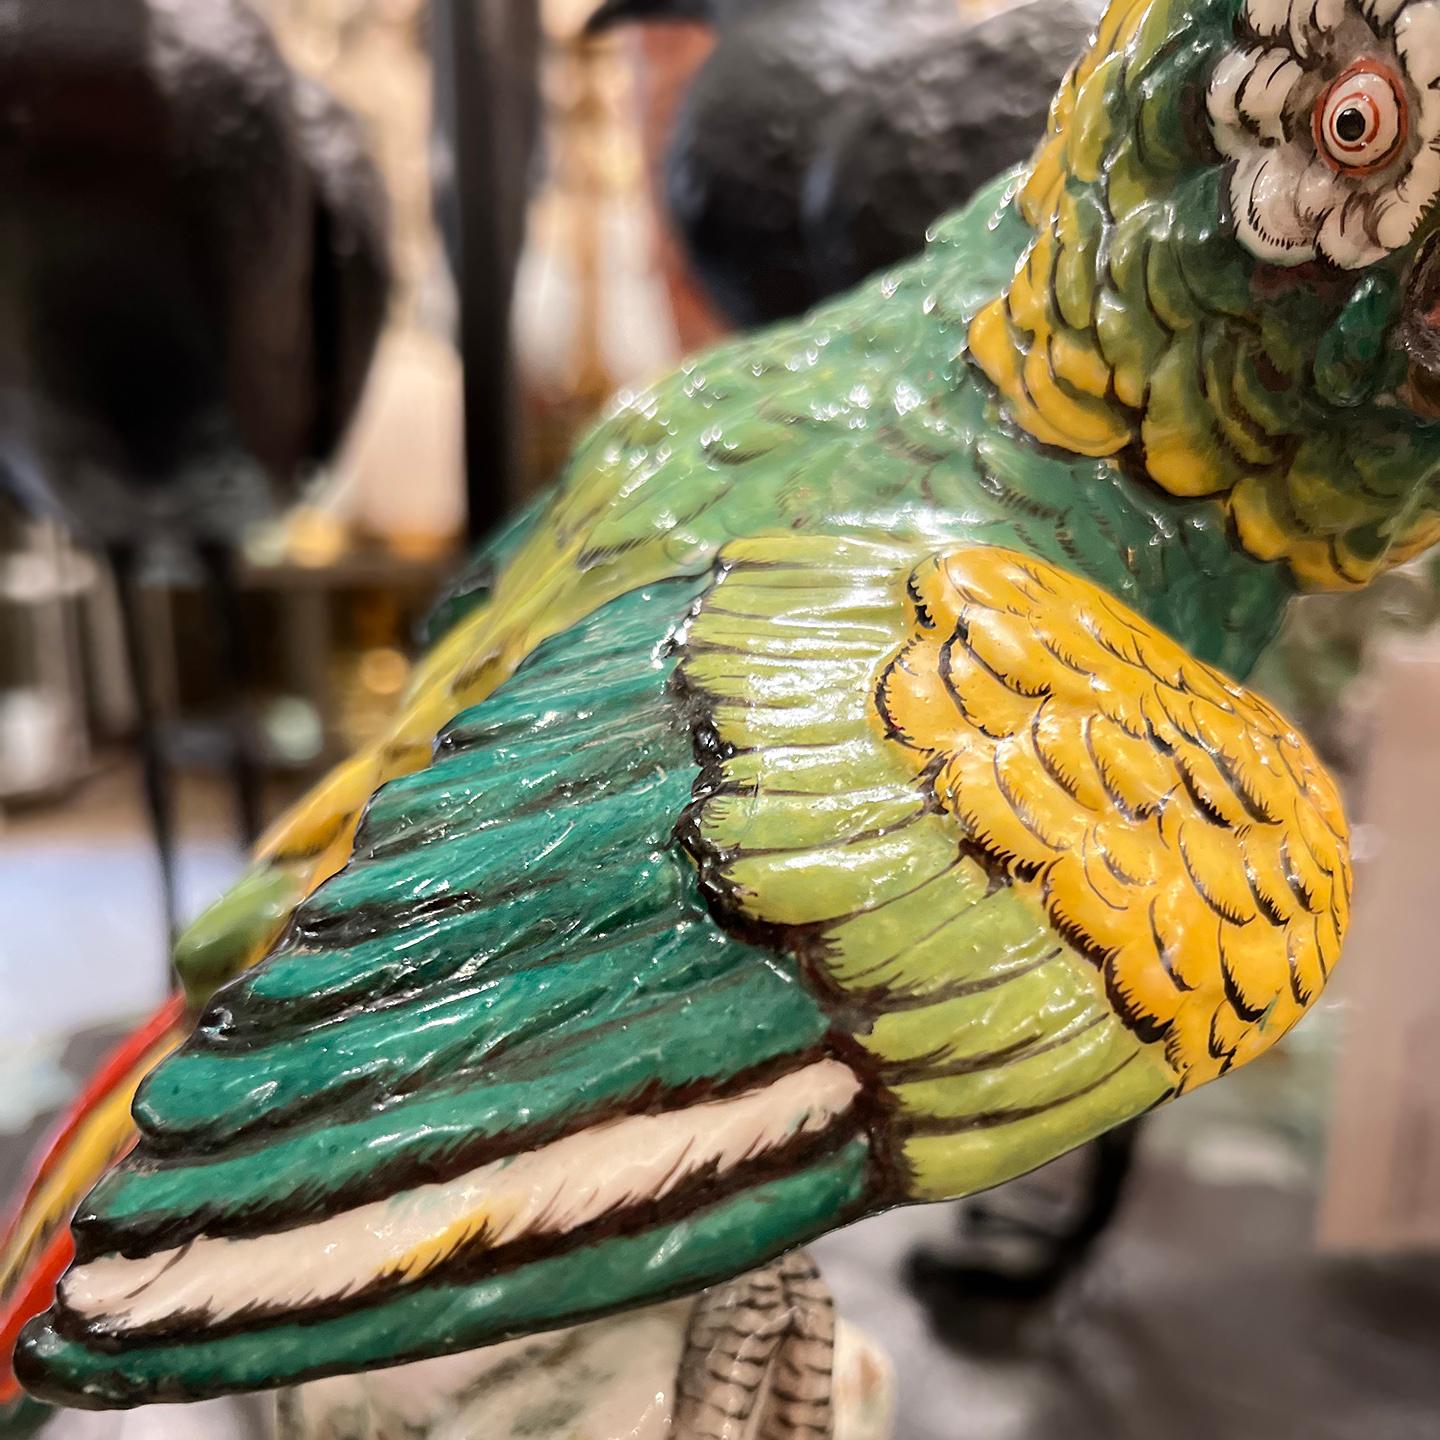 German Porcelain Parrot Figurine For Sale